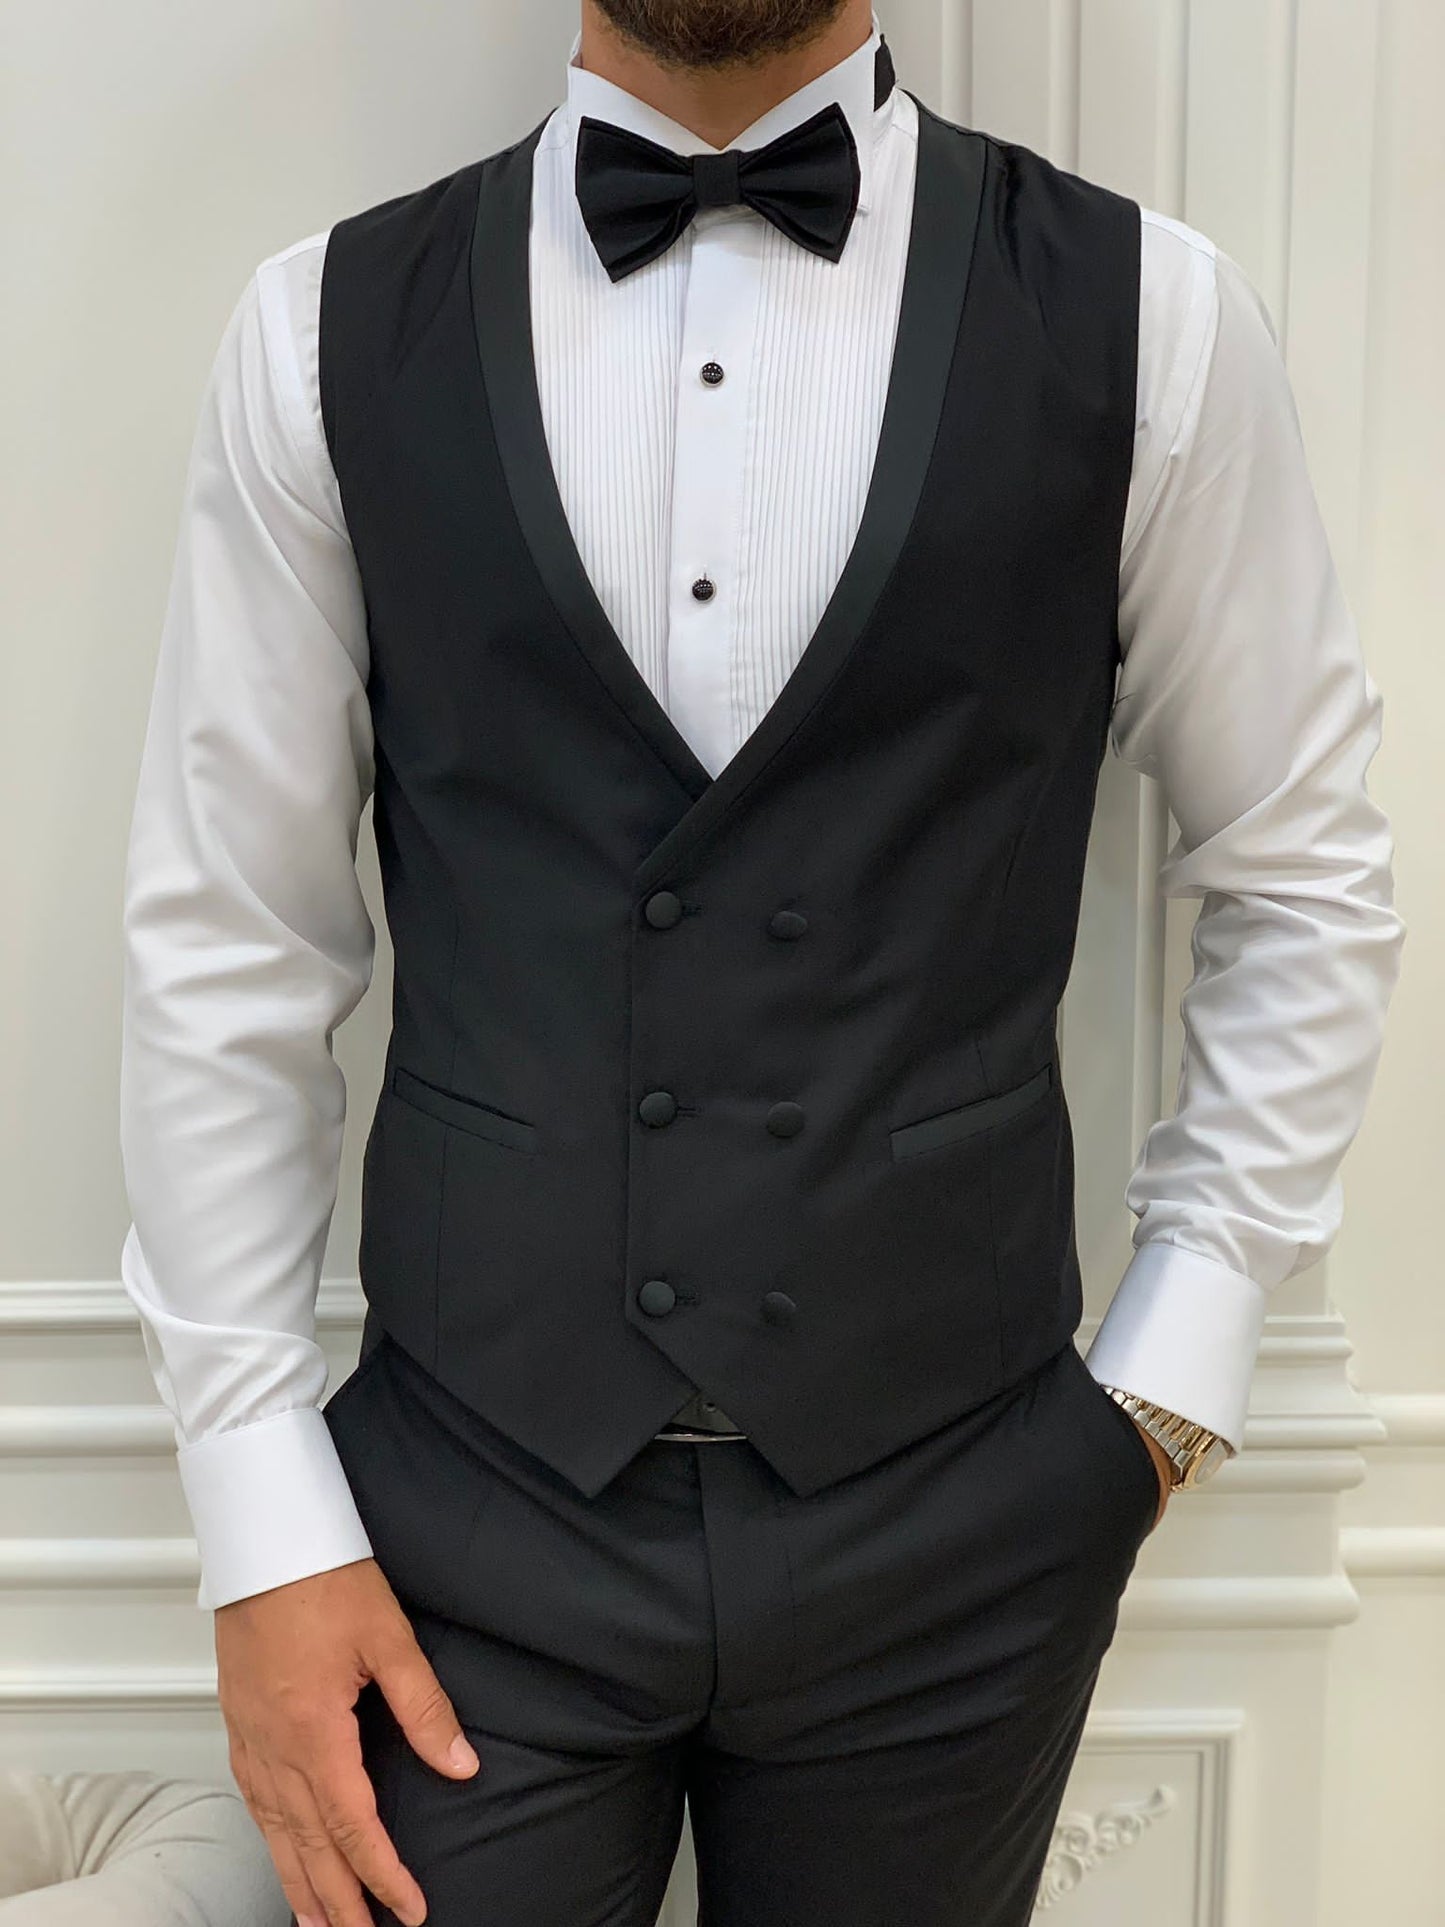 HolloMen Royal Black Tuxedo